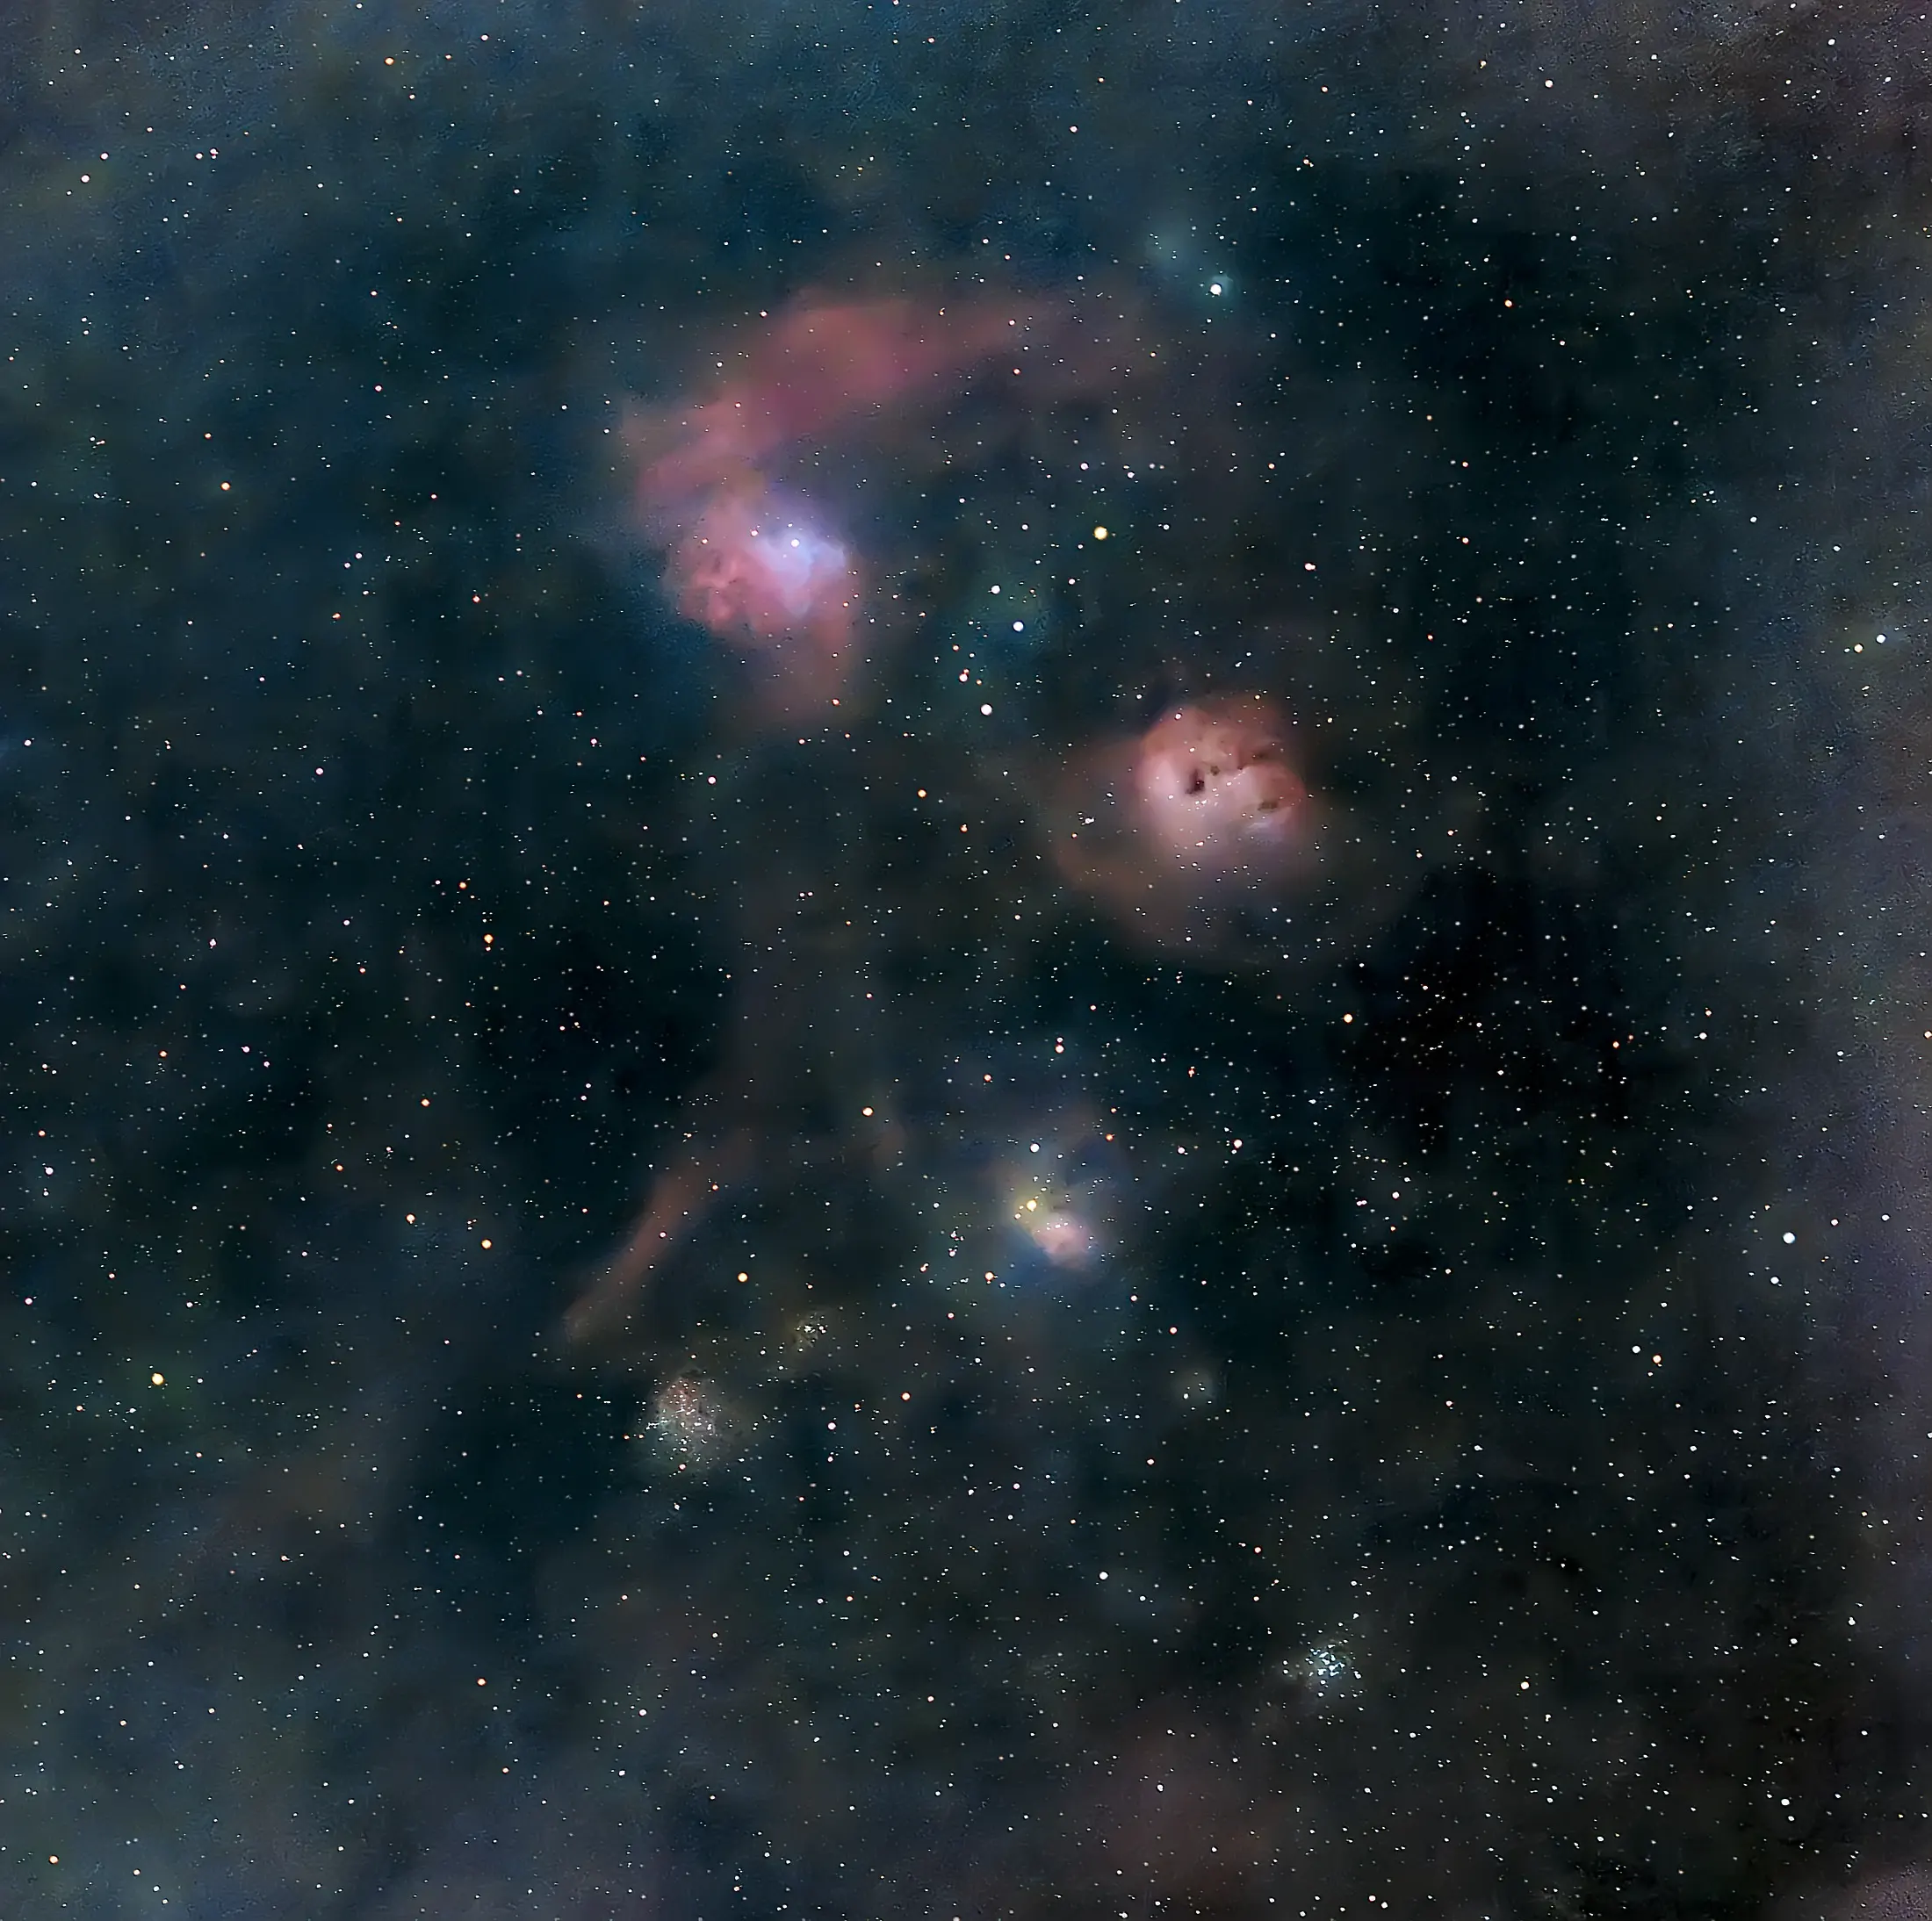 C31 火焰之星星雲 IC410 蝌蚪星雲  NGC1893 Y型星團